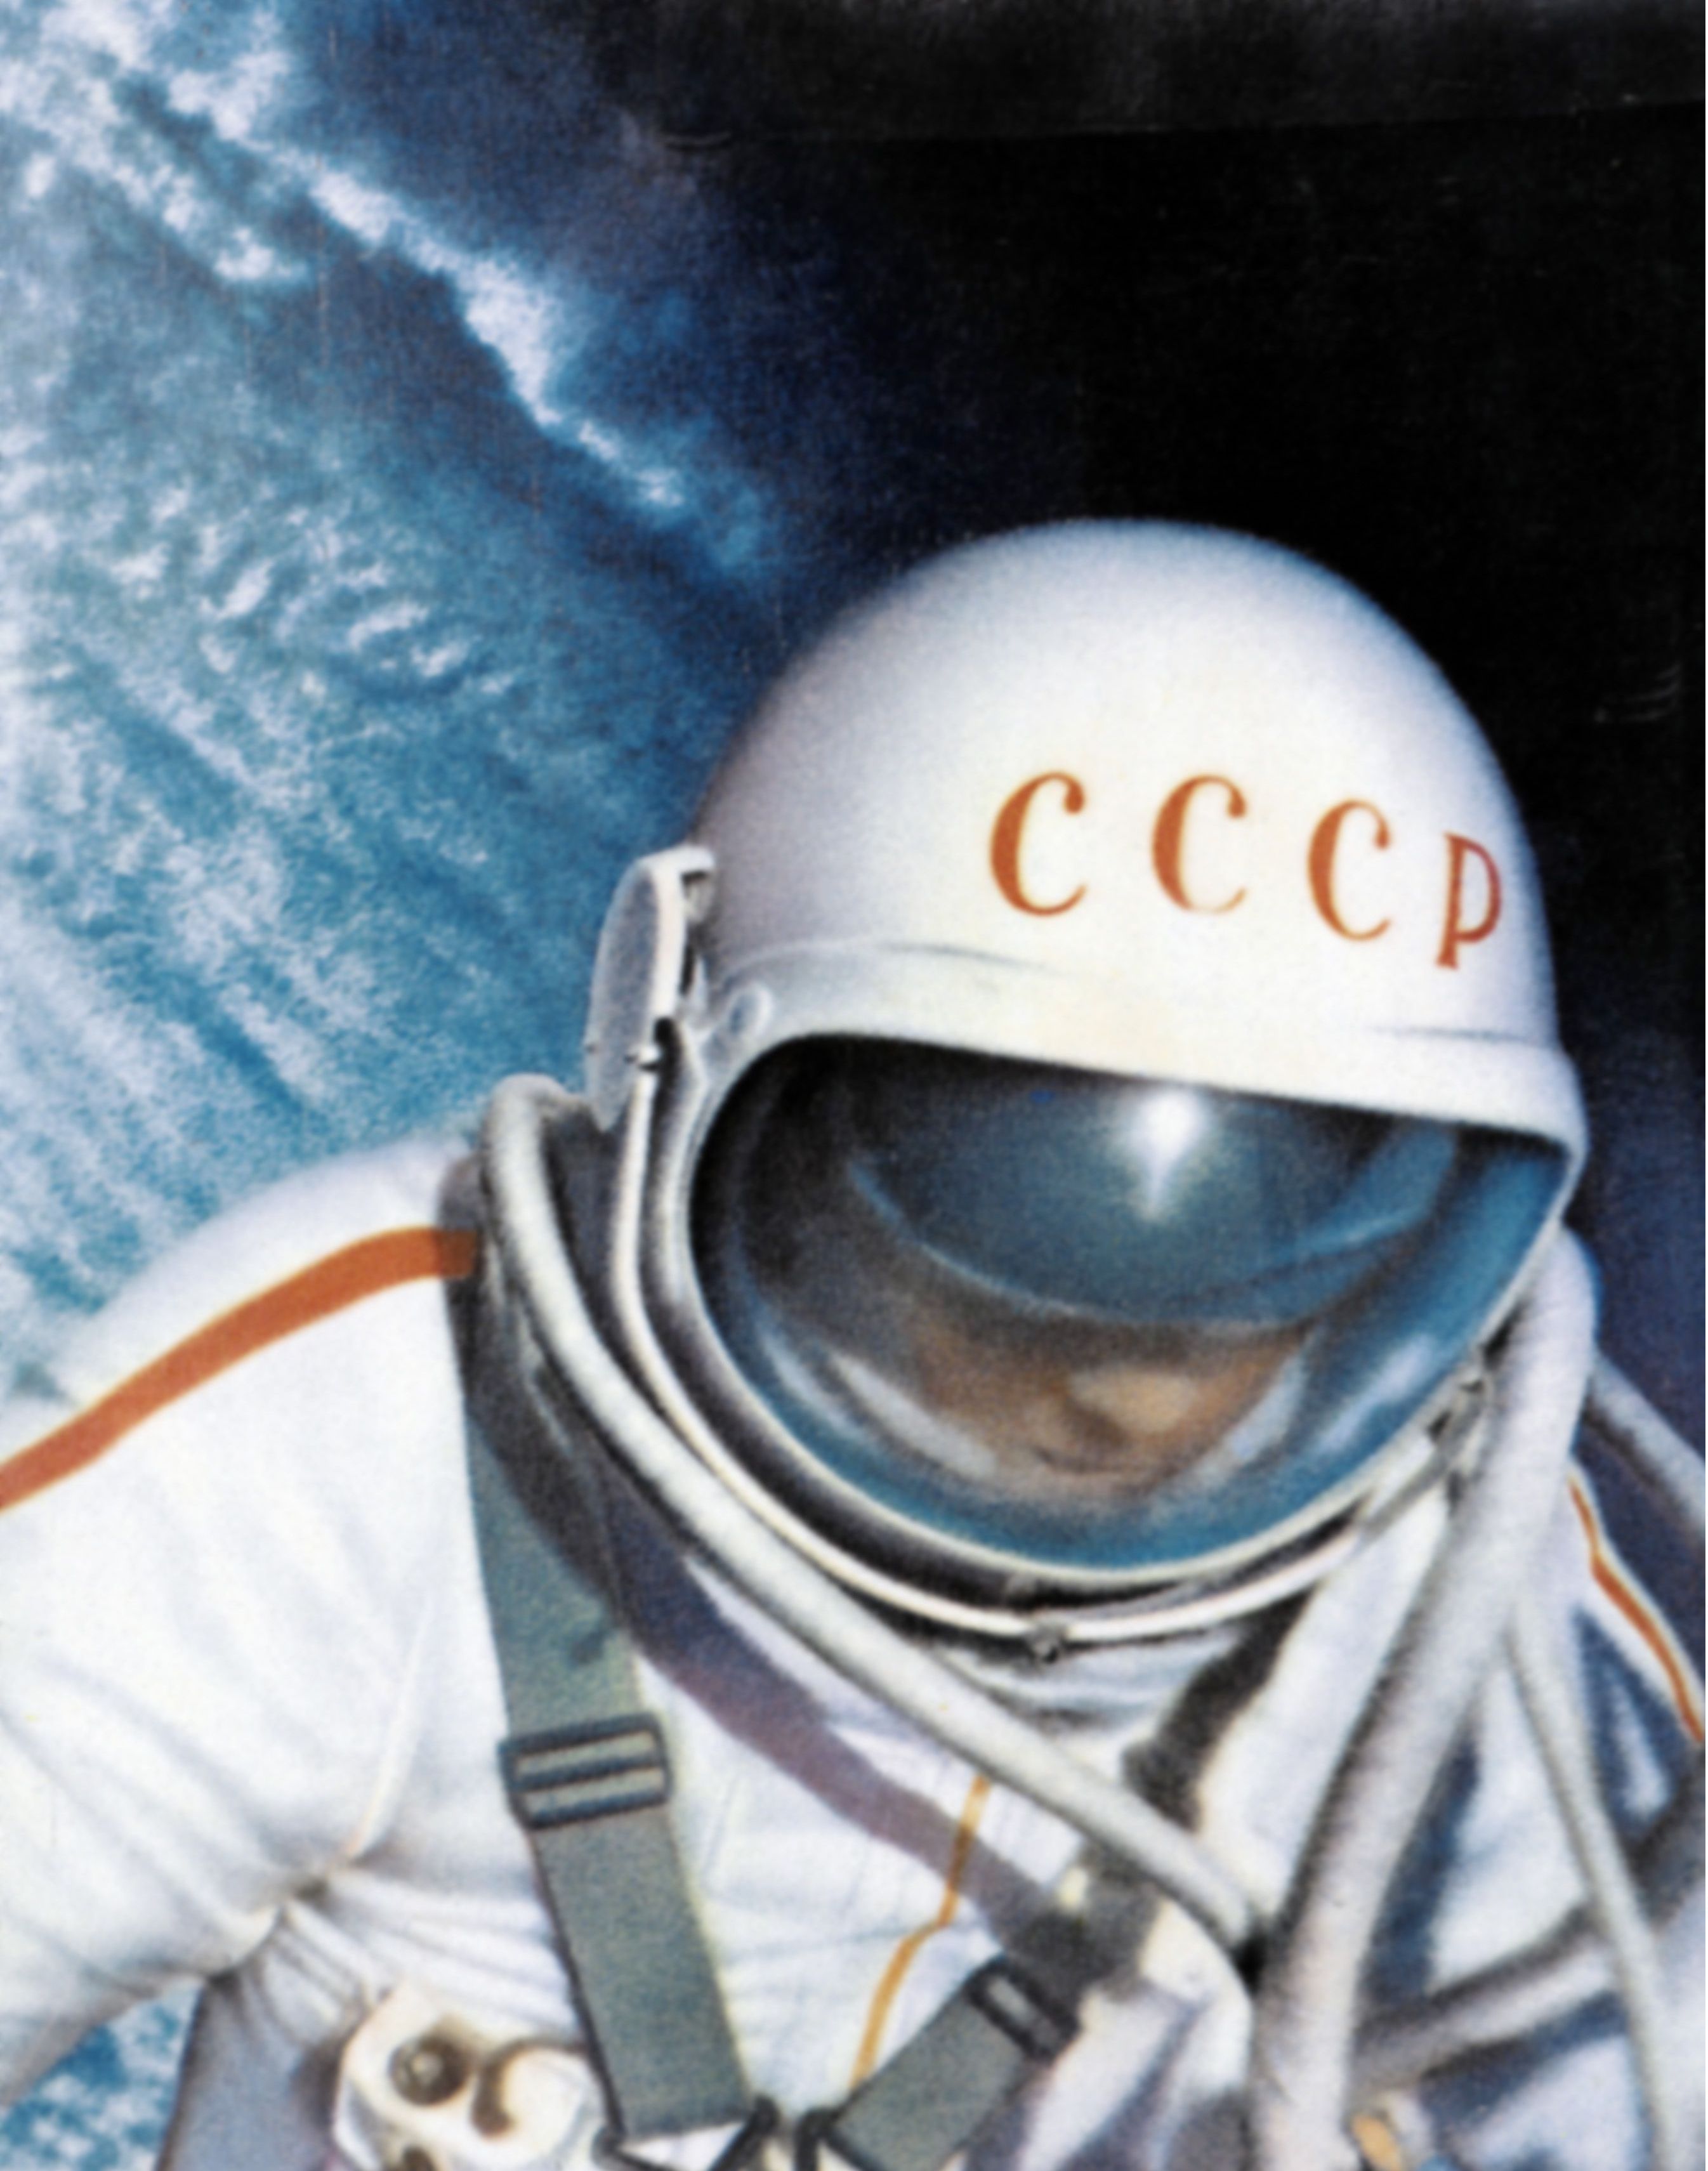 Voskhod 2 mission, soviet cosmonaut alexei leonov during world's first space walk (eva) in 1965. VARIOUS